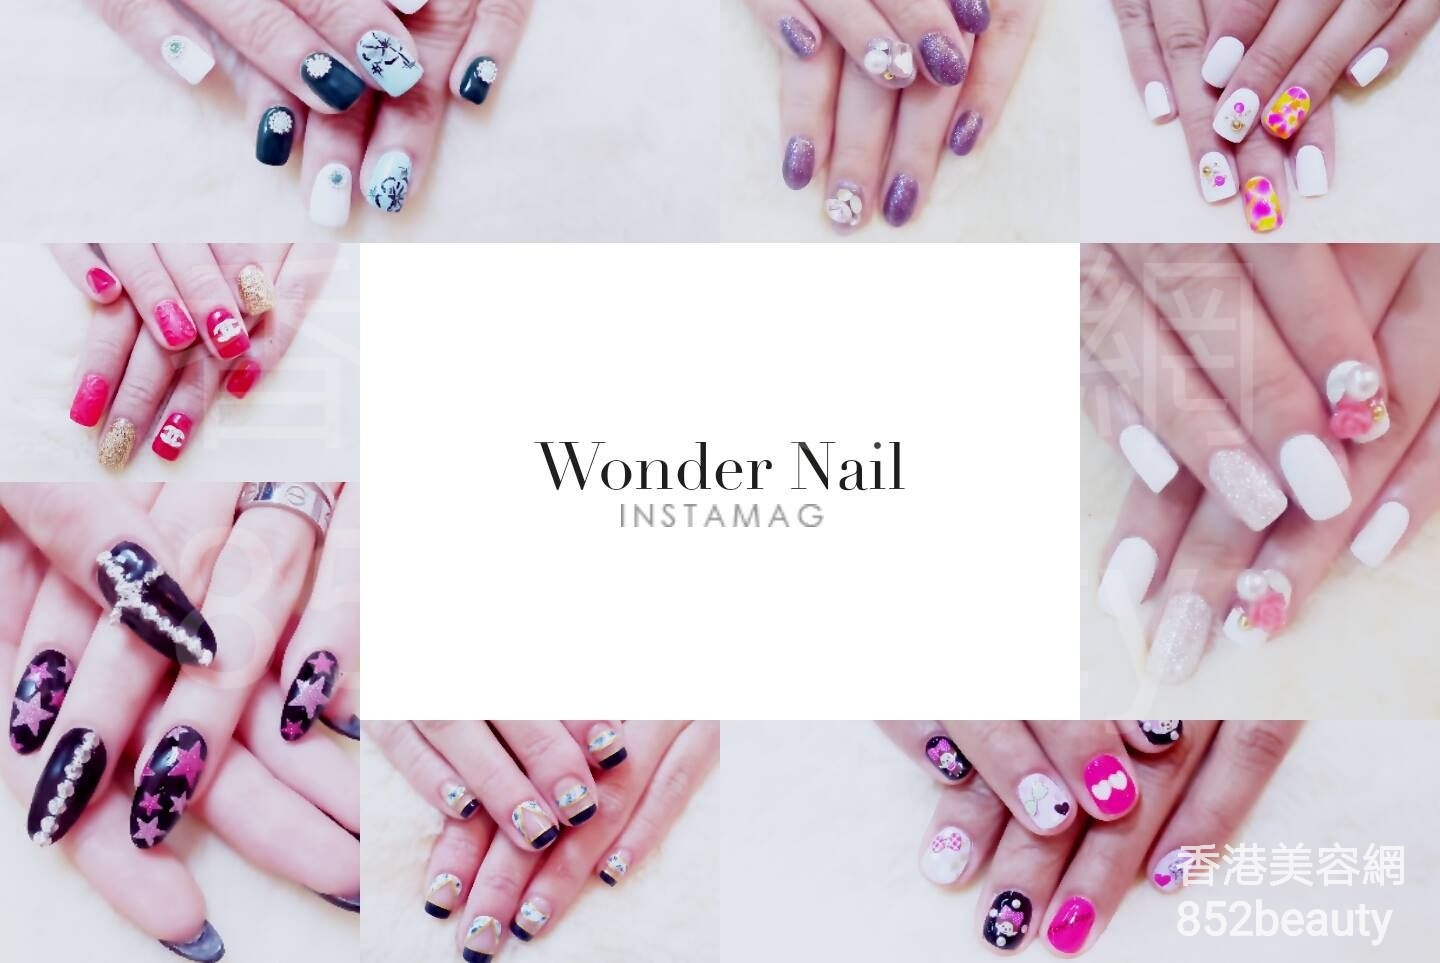 香港美容網 Hong Kong Beauty Salon 美容院 / 美容師: Wonder Nail & Beauty